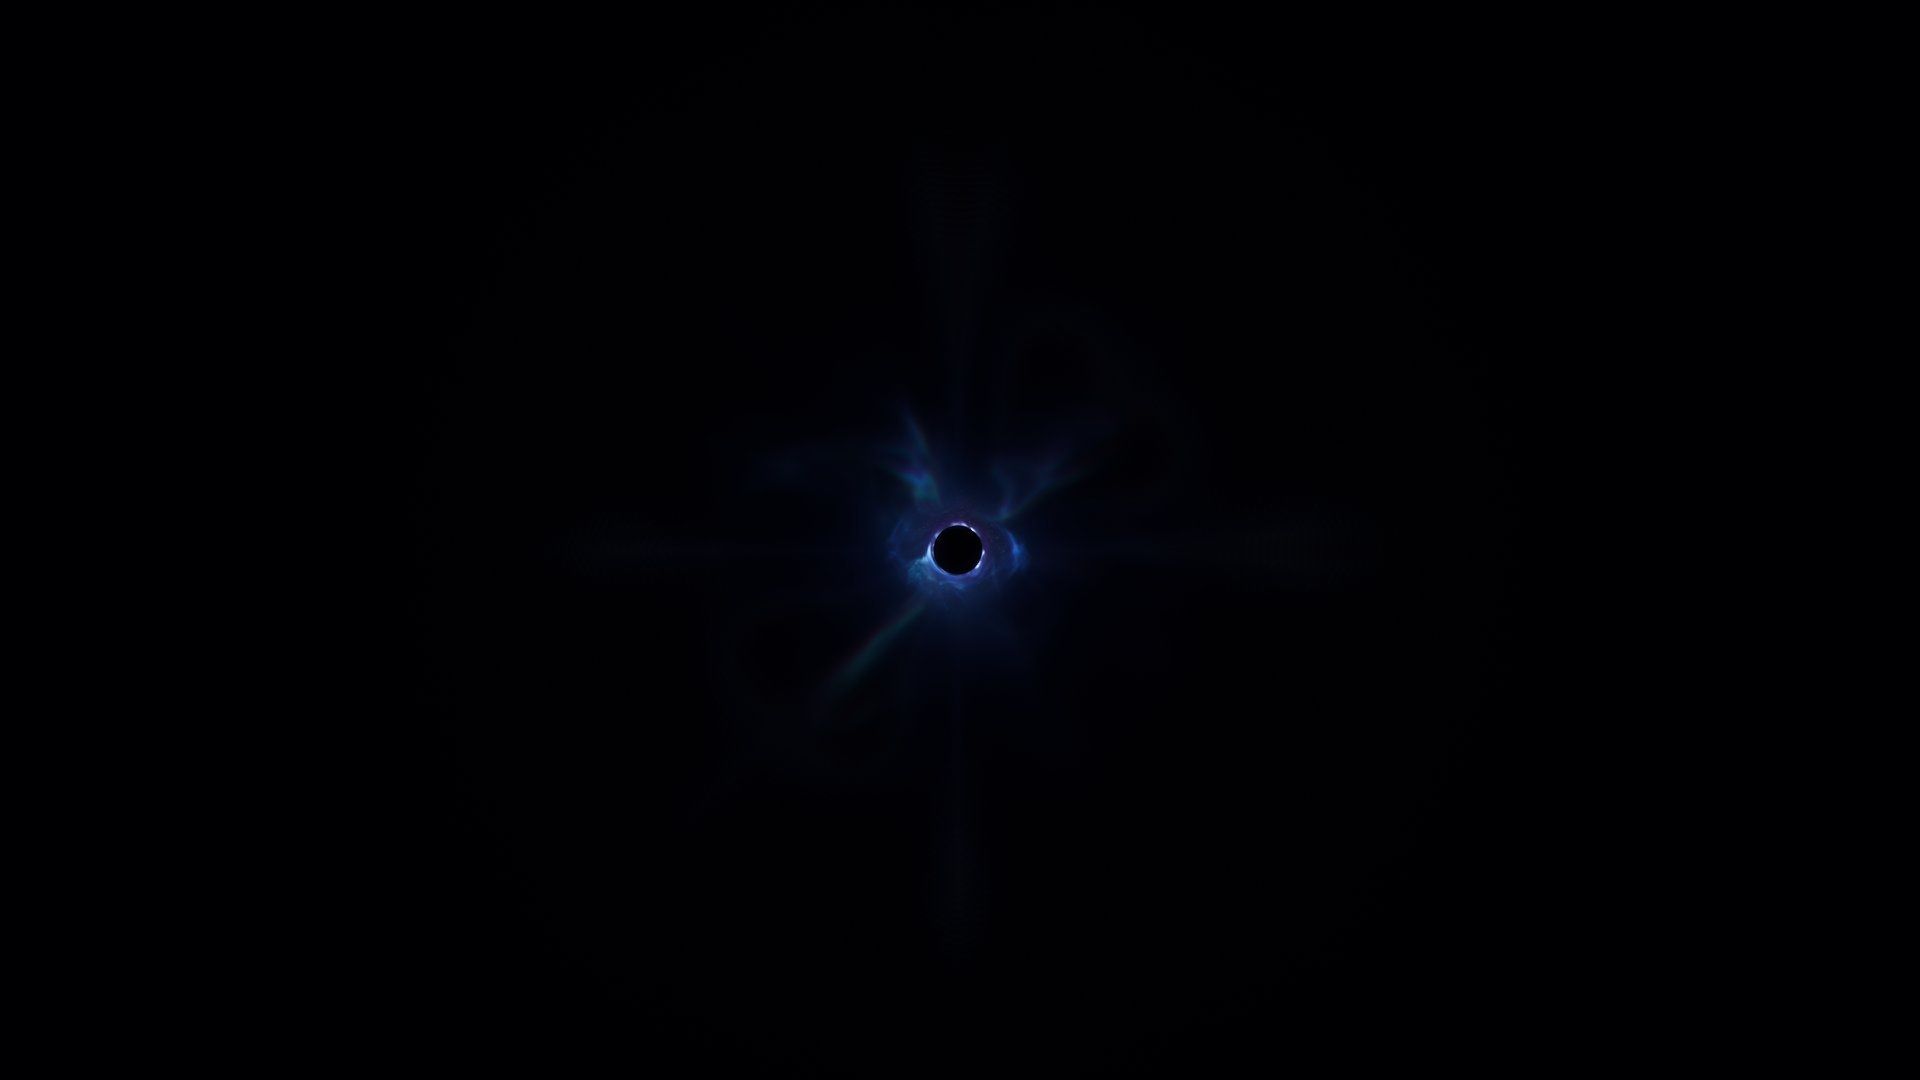 Fortnite goes dark with dramatic season finale image 1